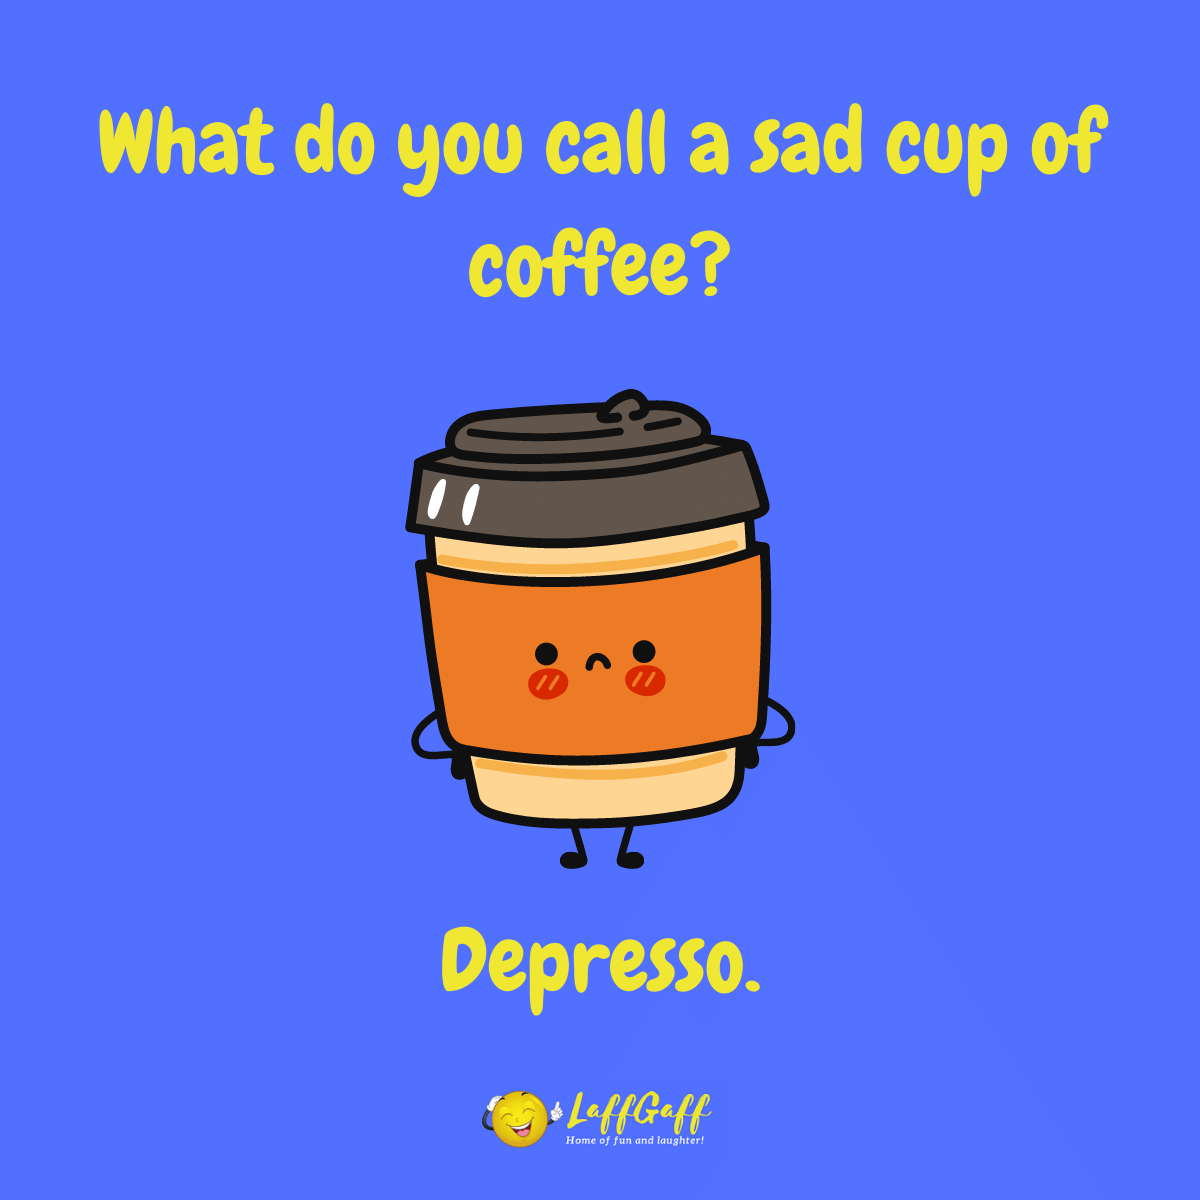 Featured image for a sad coffee joke.